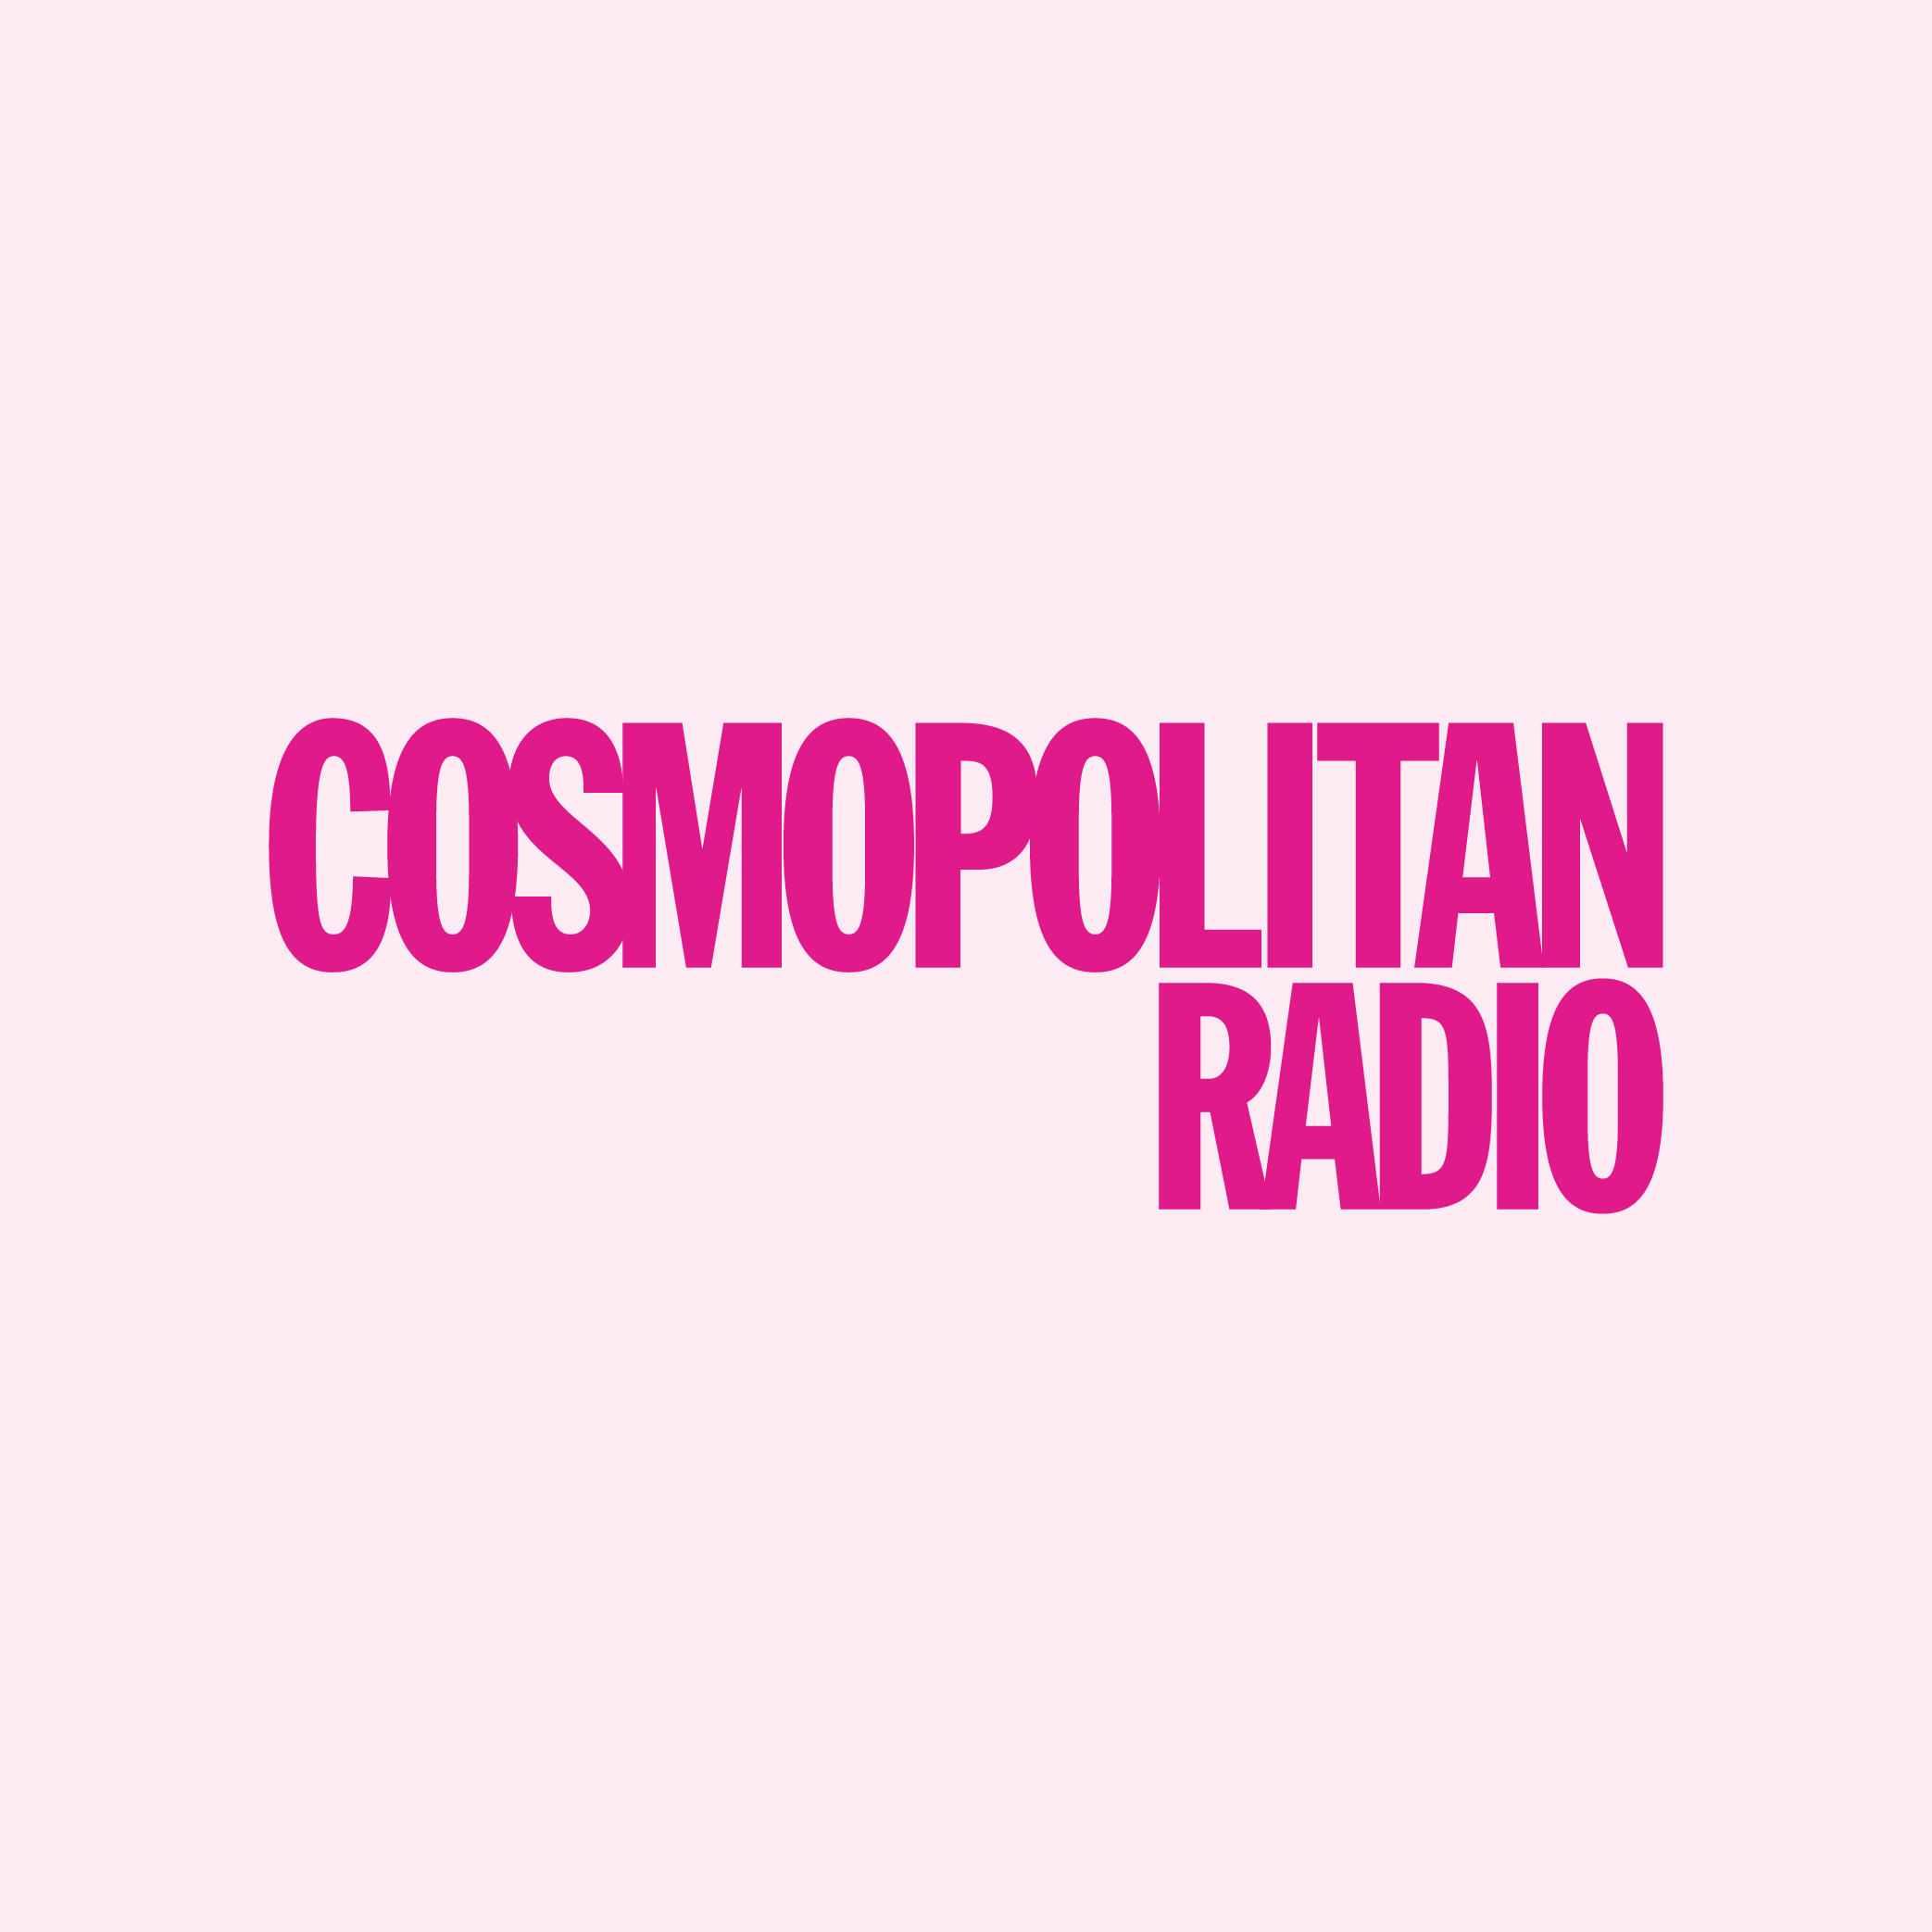 COSMOPOLITAN RADIO